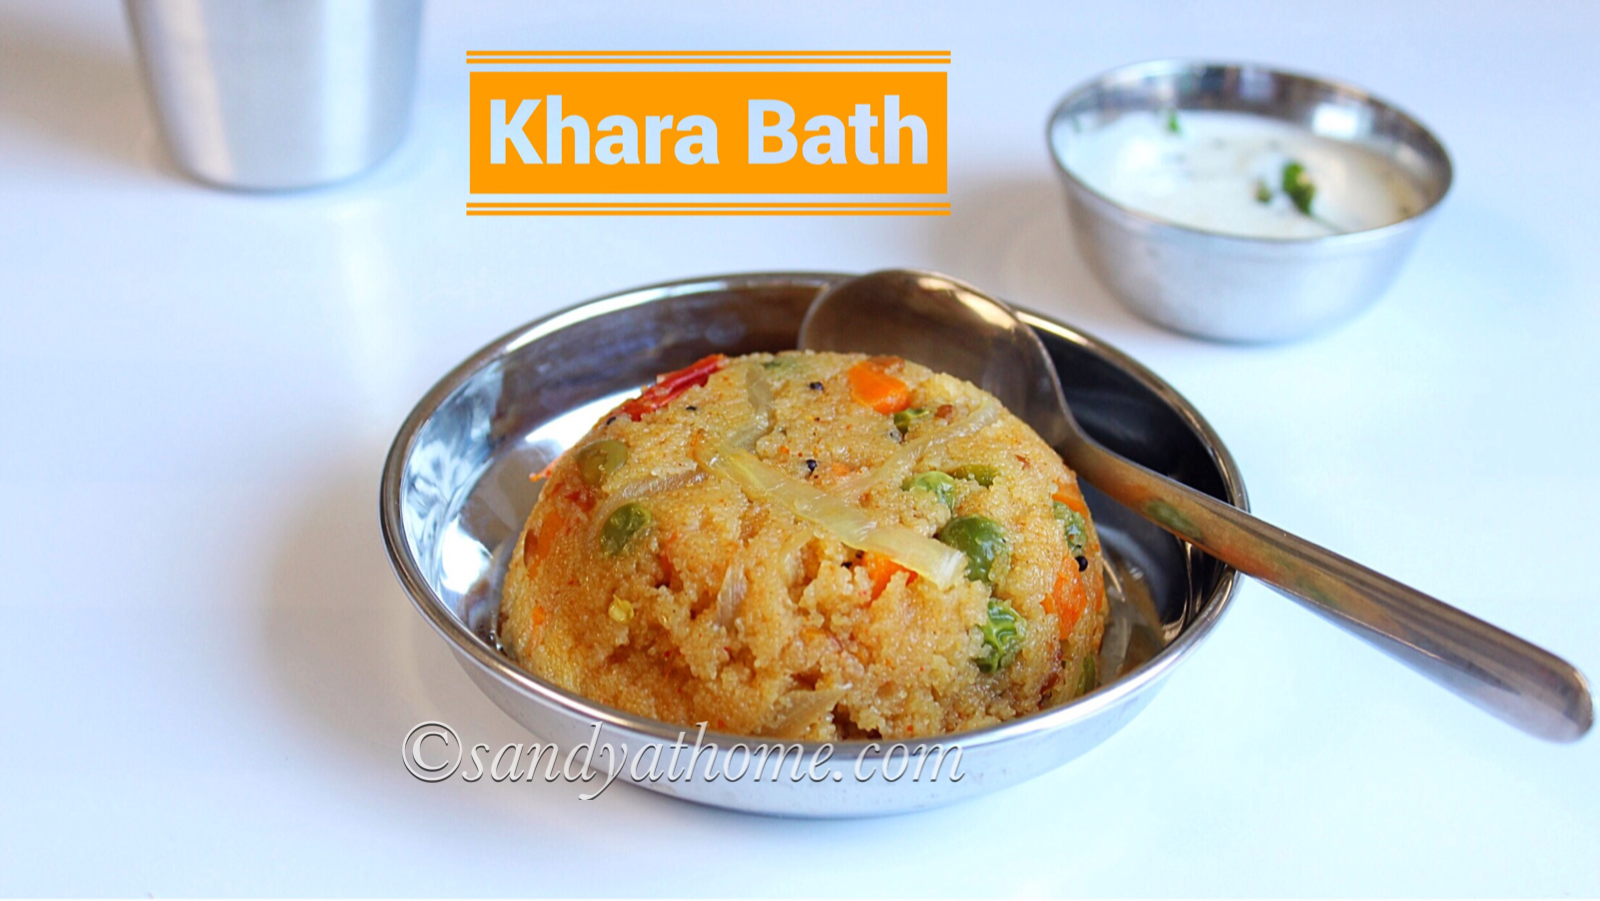 khara bath recipe, khara bath, masala bhath, rava bhath, south indian breakfast